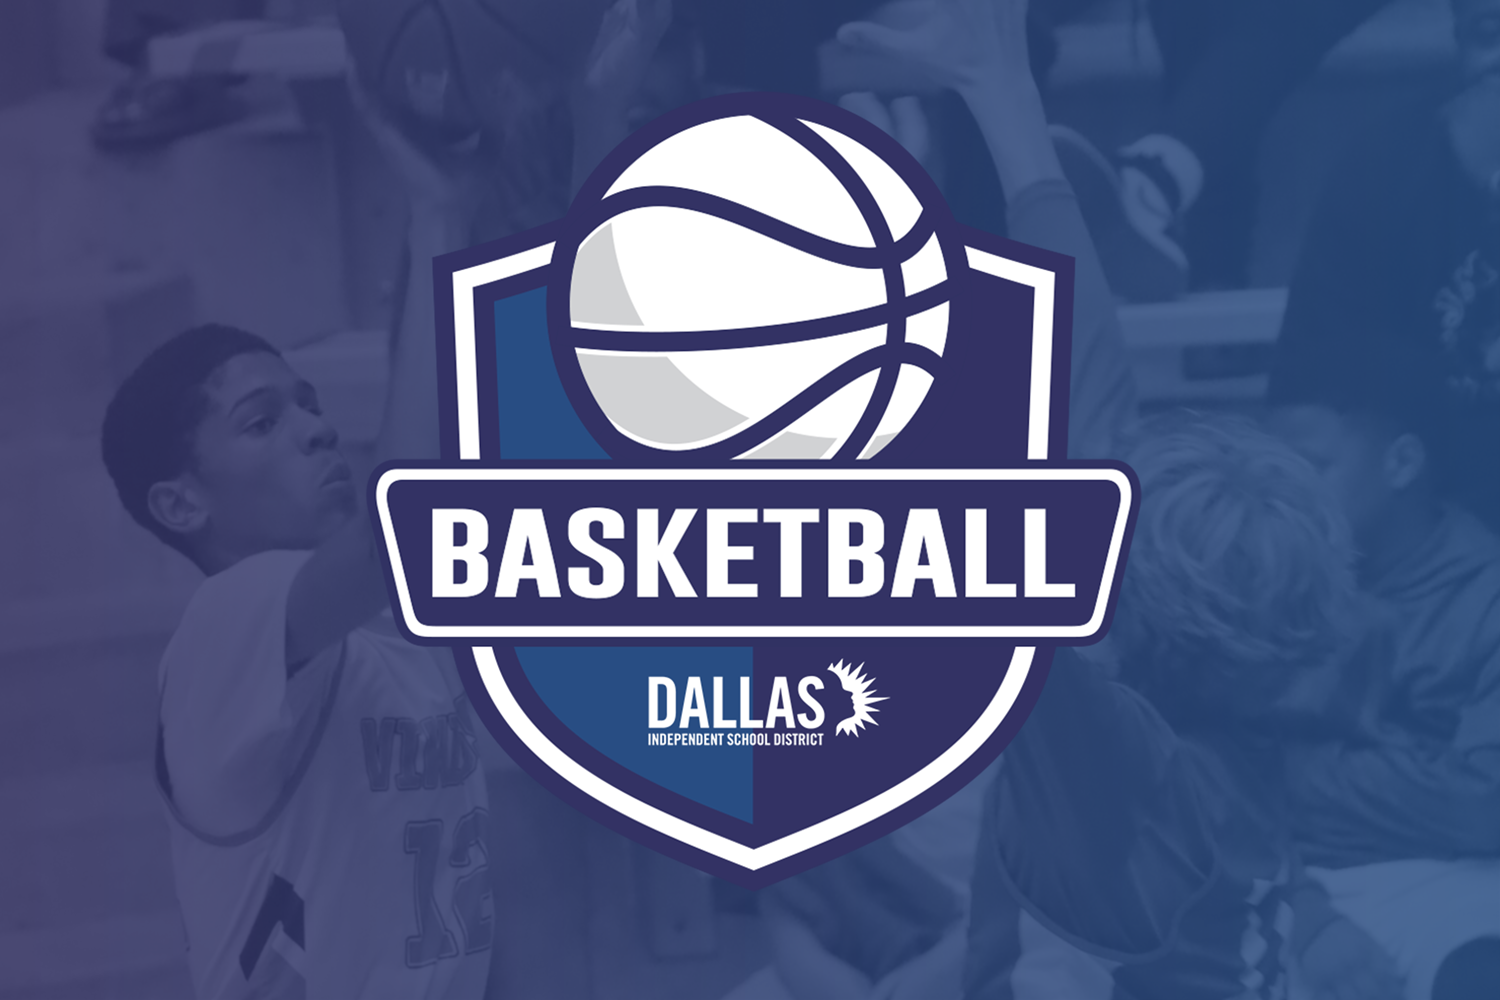  Dallas ISD Basketball Academy Begins April 25